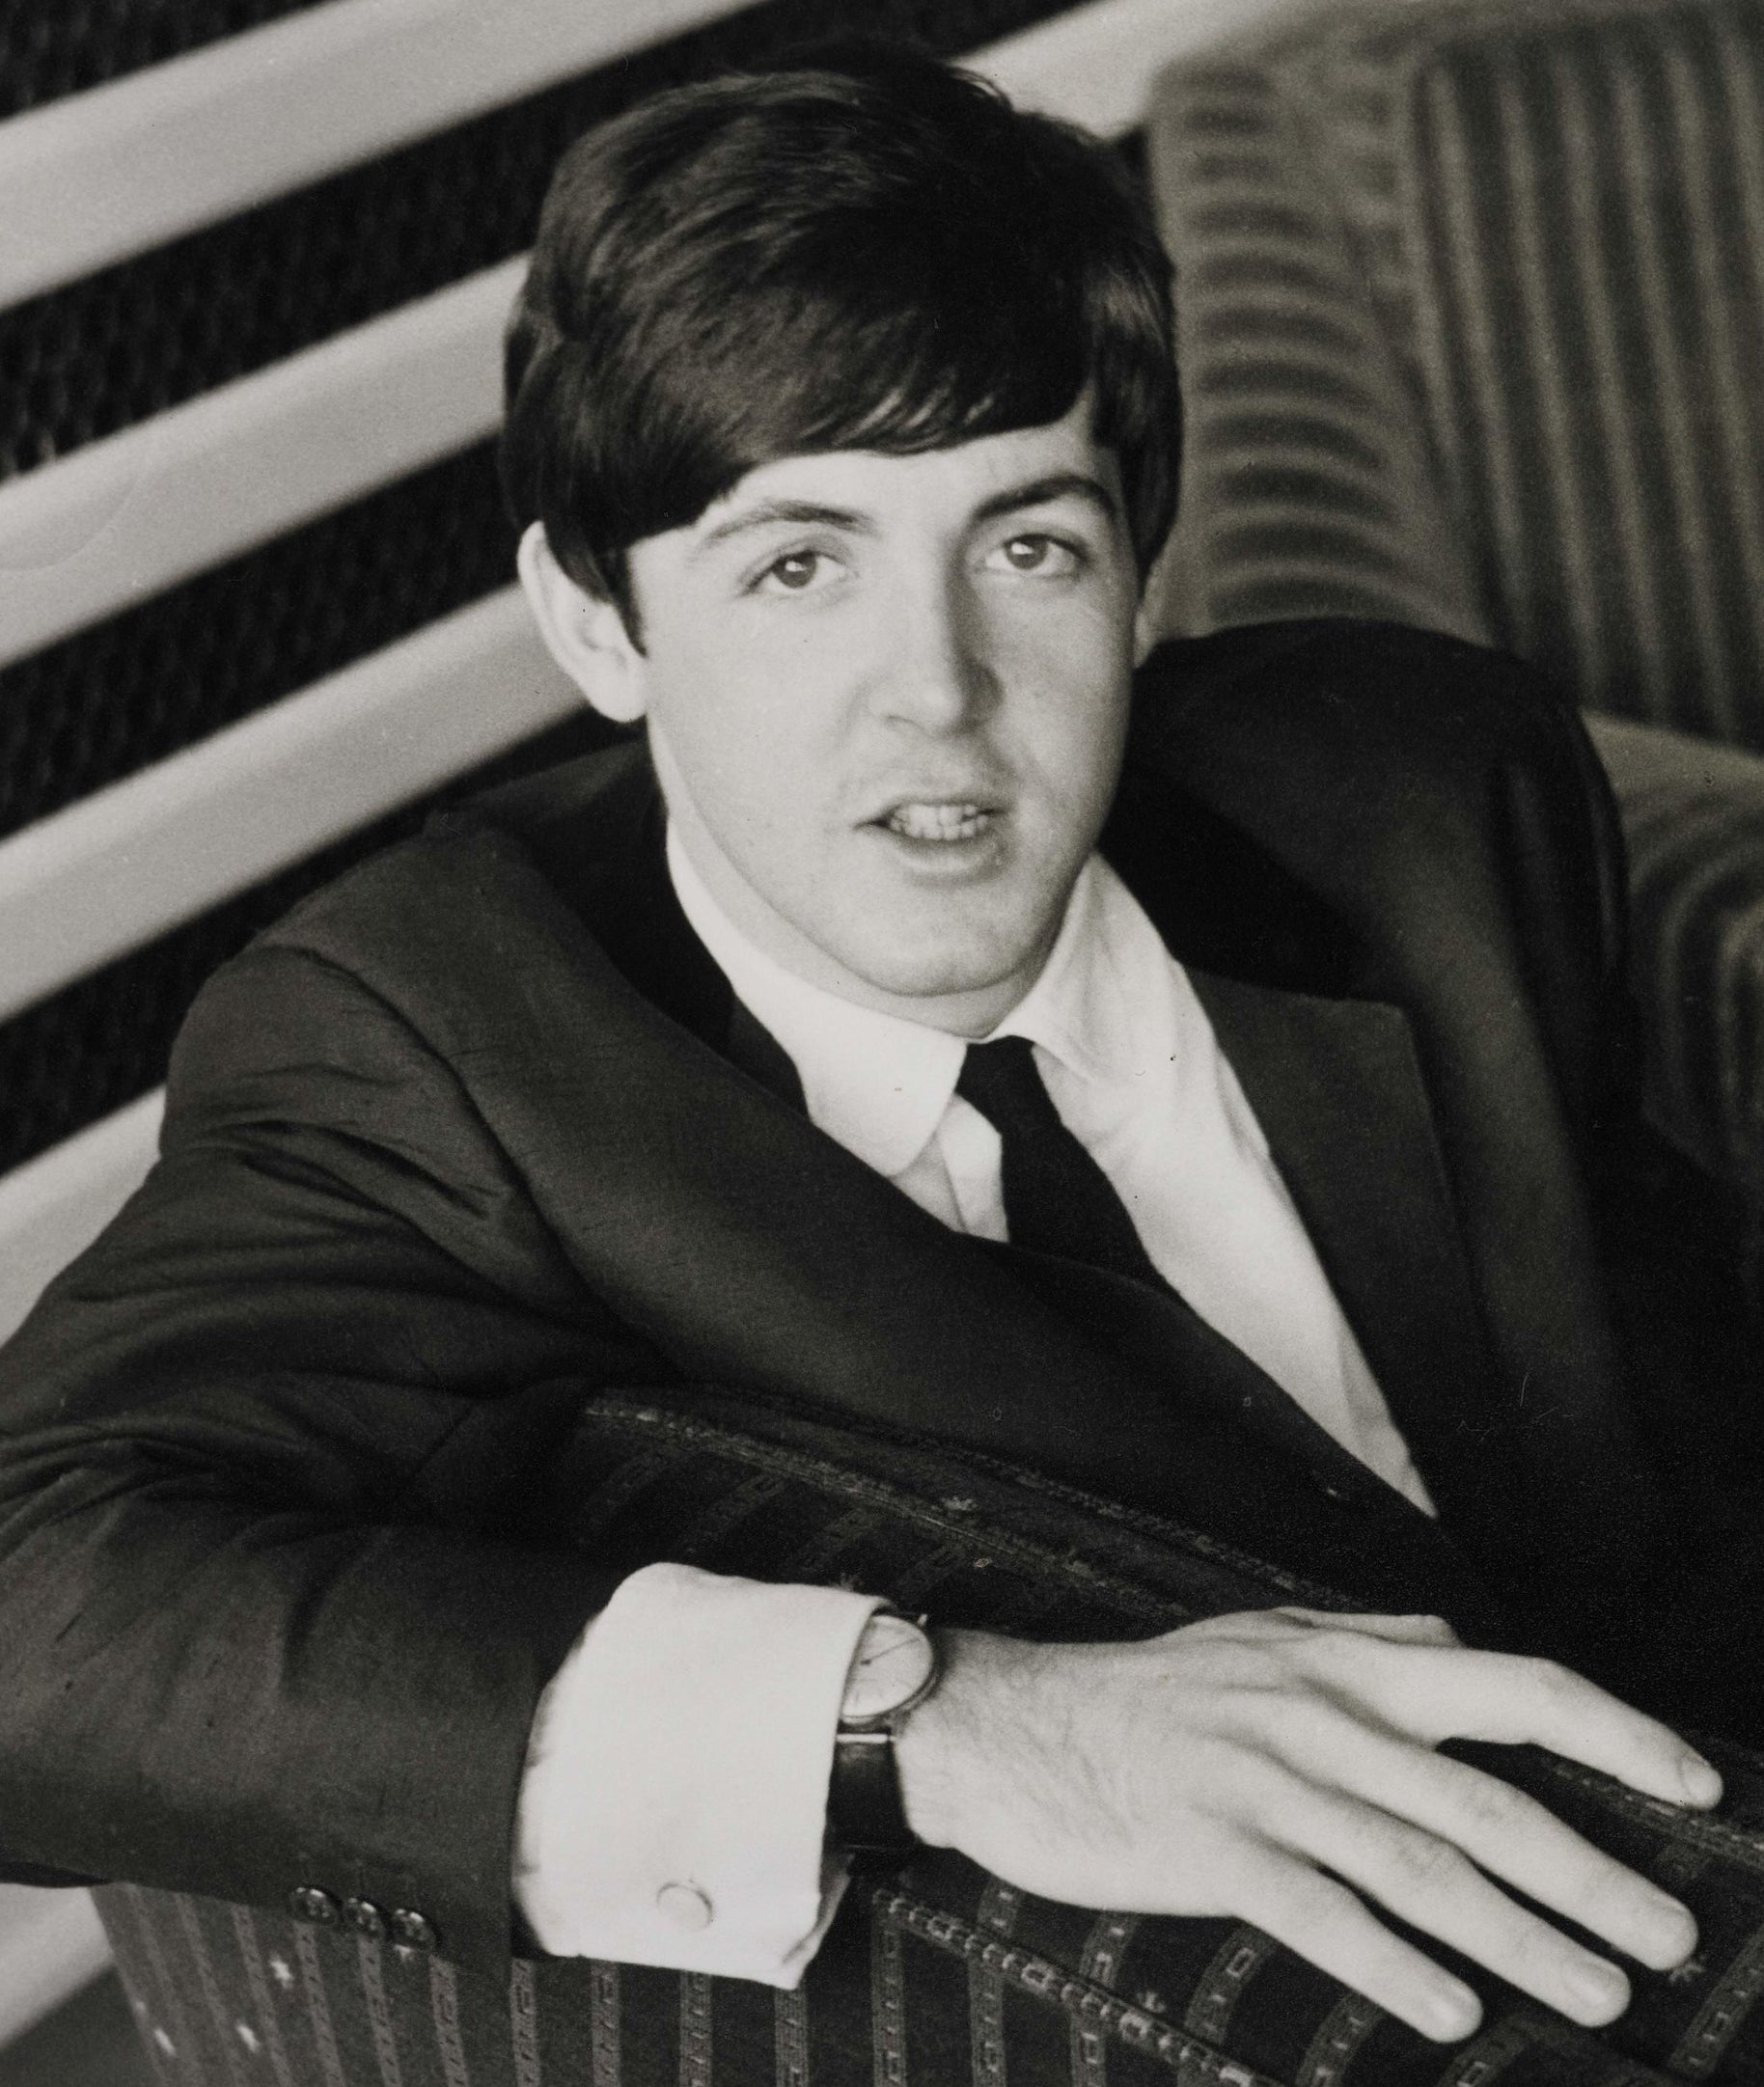 Young Paul McCartney